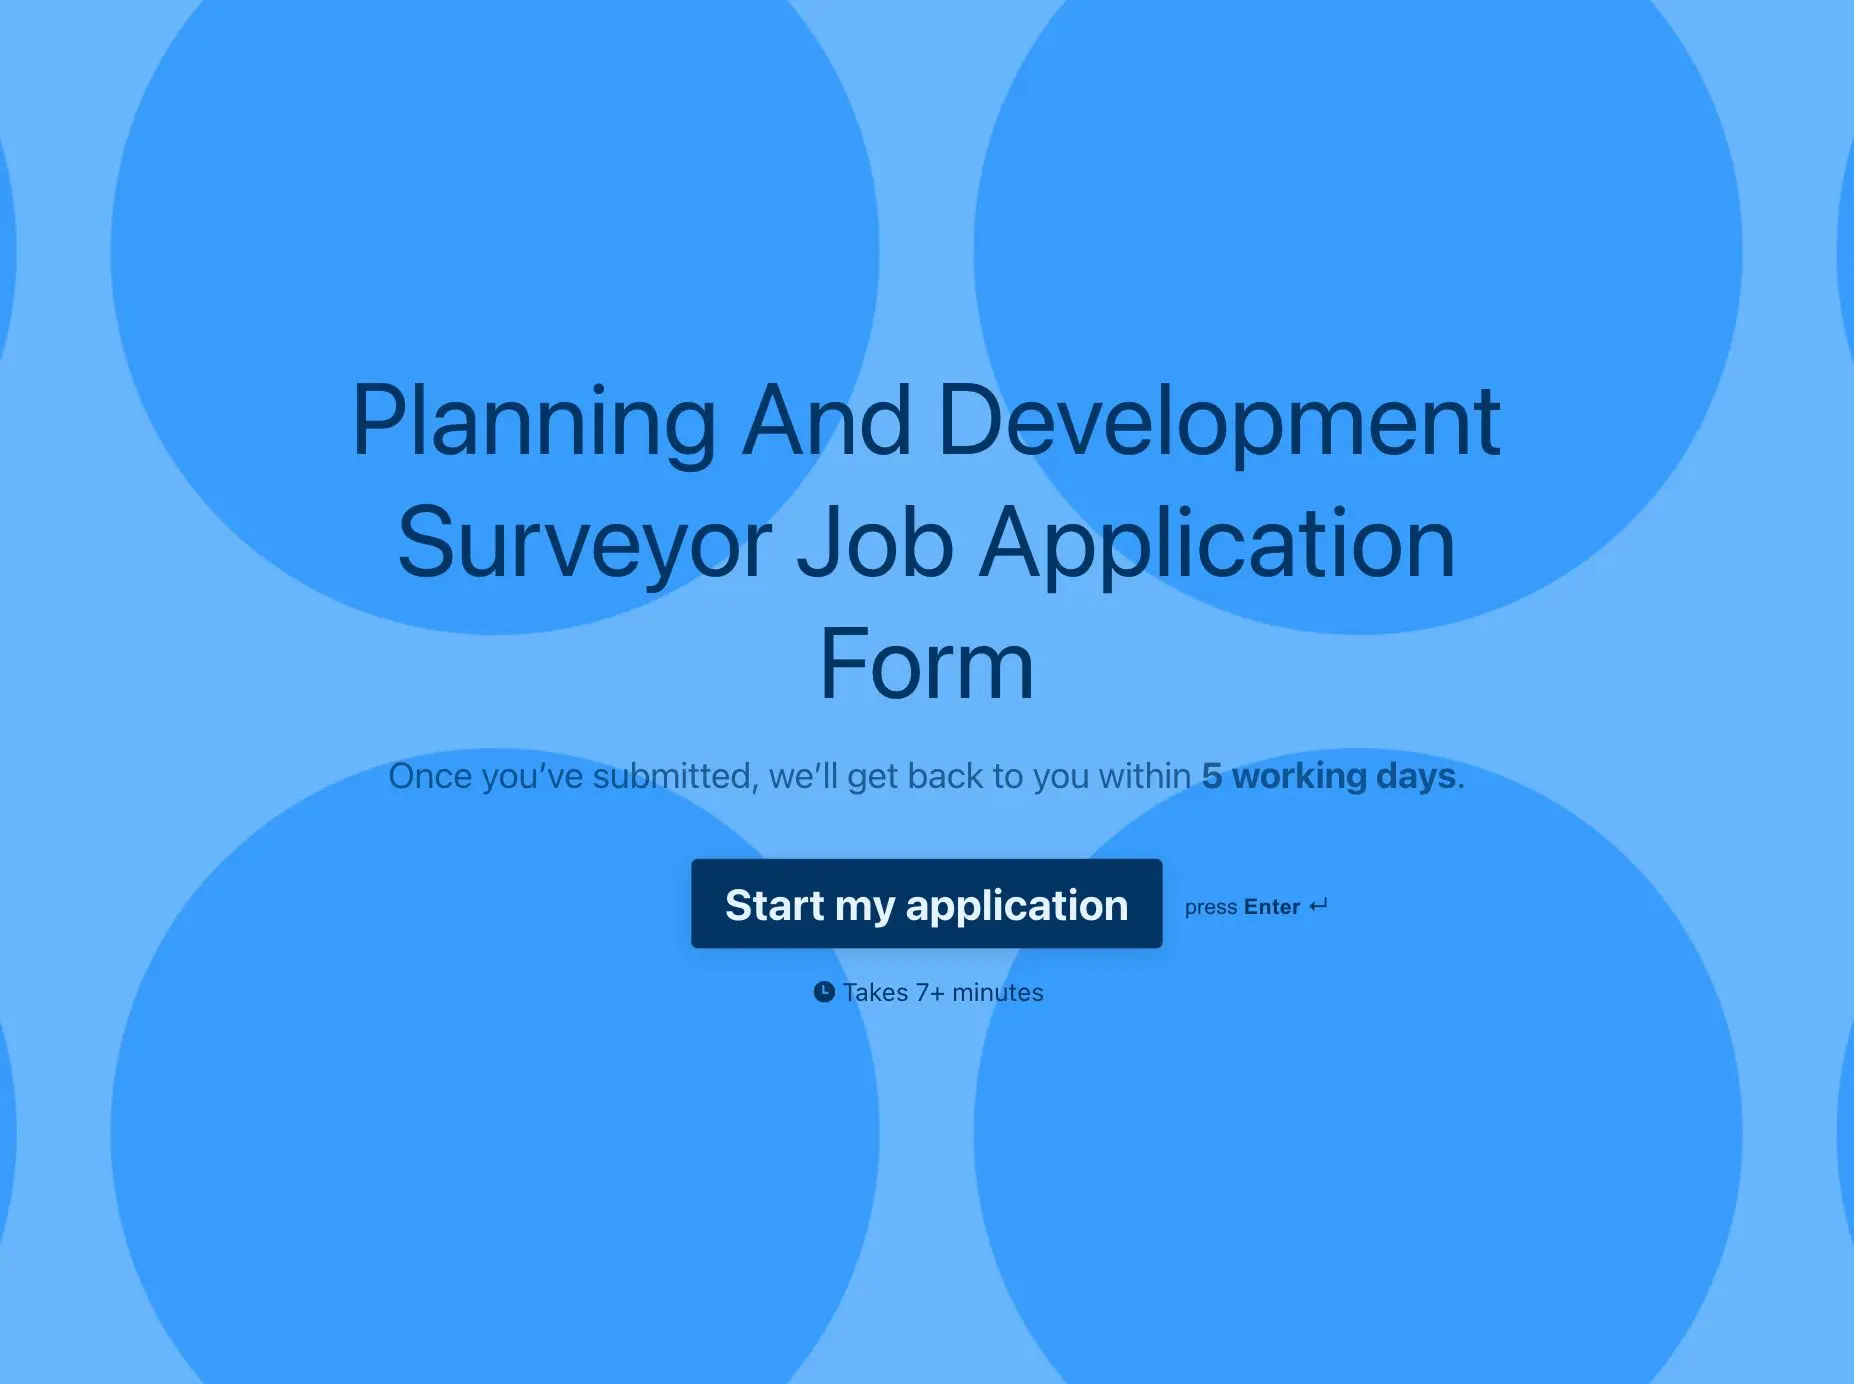 Planning And Development Surveyor Job Application Form Template Hero